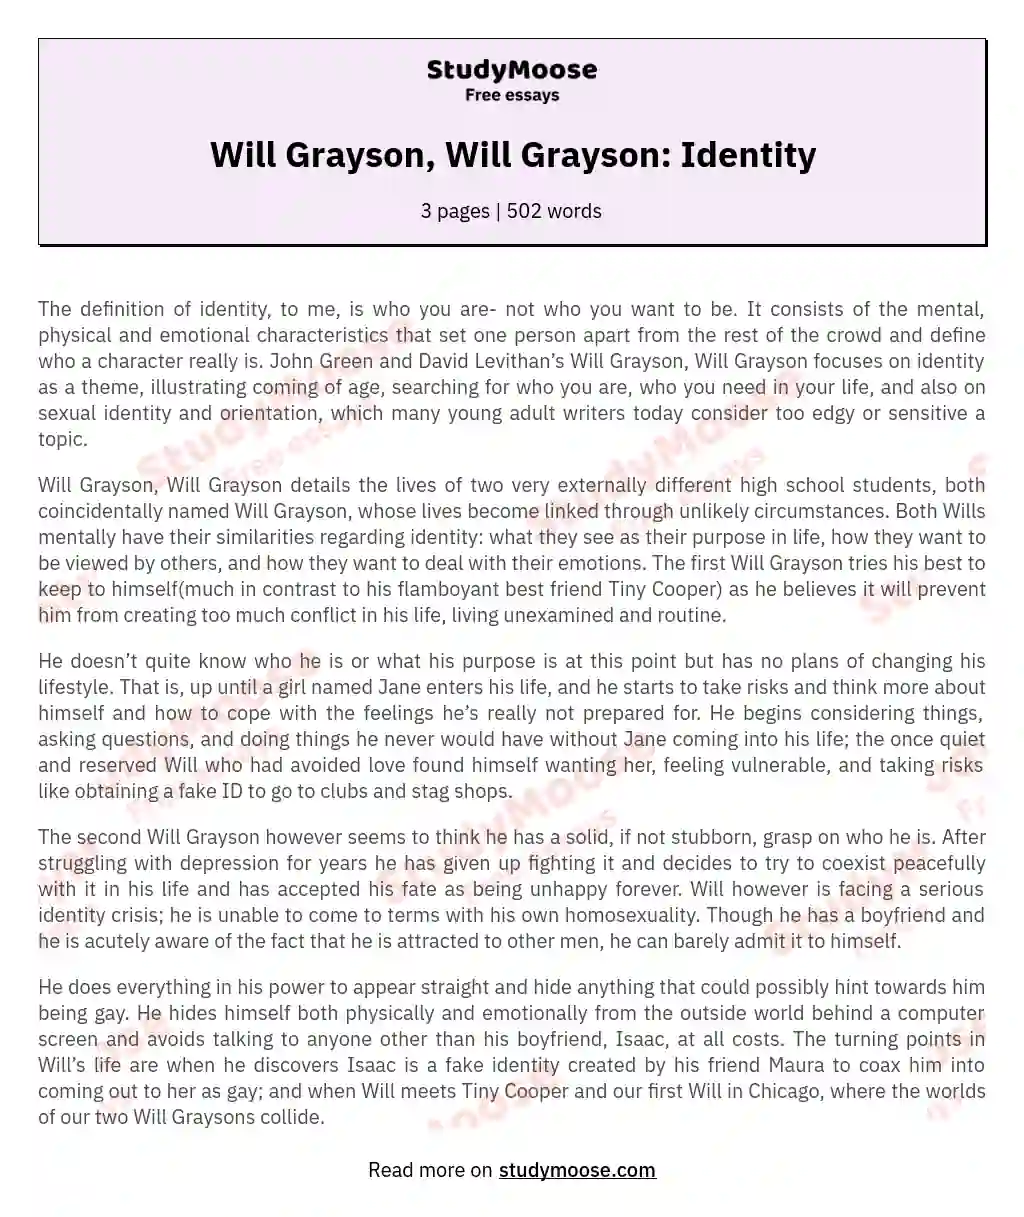 Will Grayson, Will Grayson: Identity essay